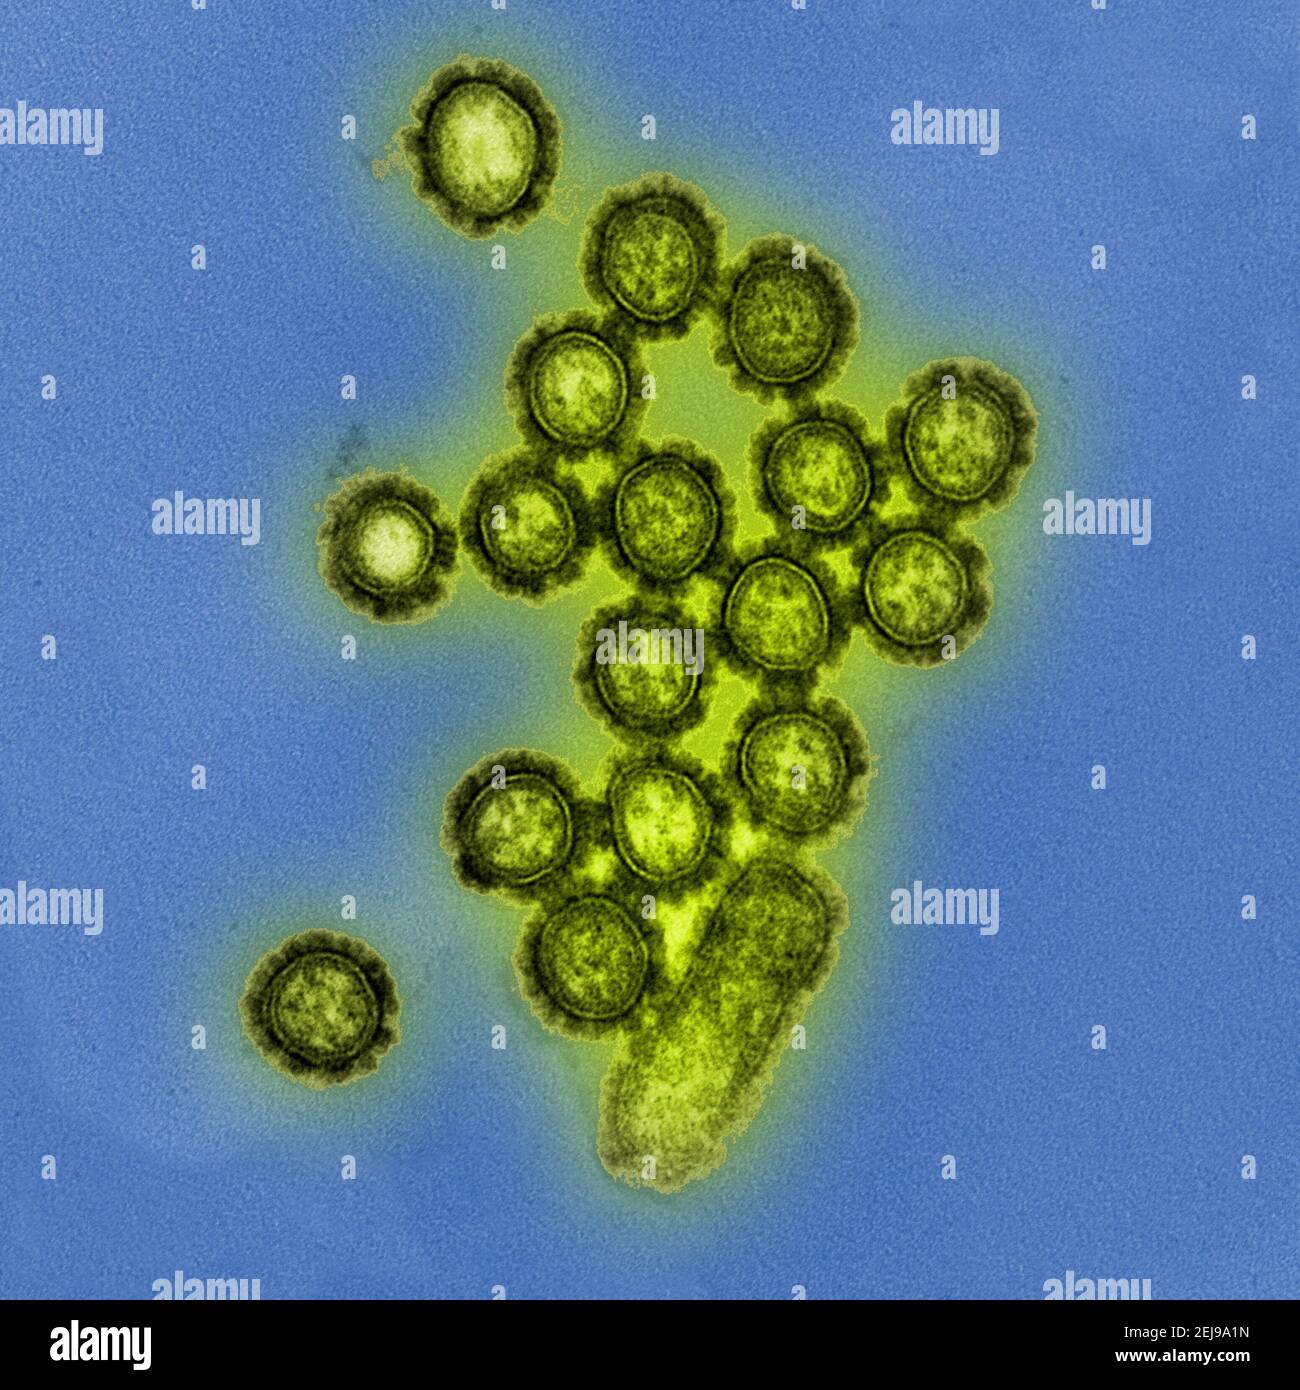 H1n1 influenza virus particles Stock Photo